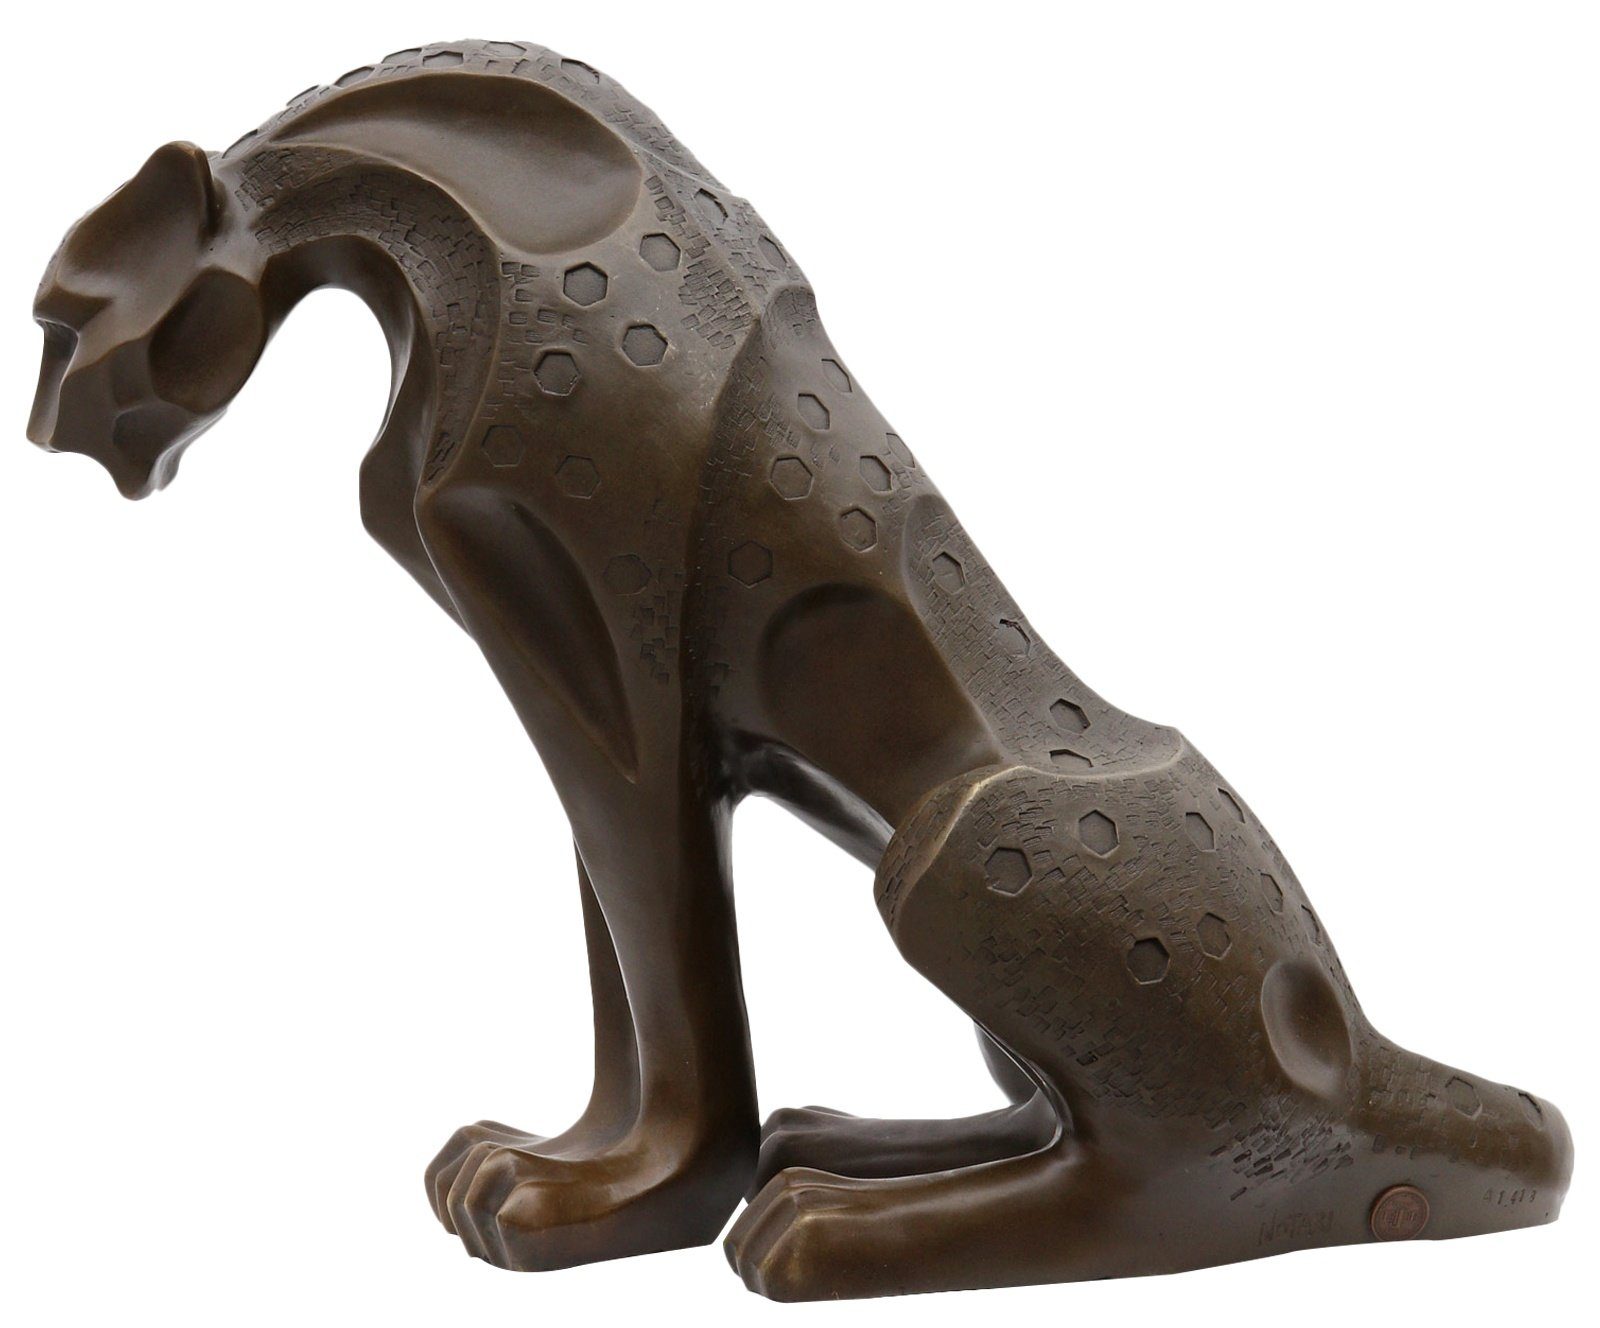 Aubaho Skulptur Bronzeskulptur Gepard Antik-Stil Bronze R Statue Leopard Panther Figur